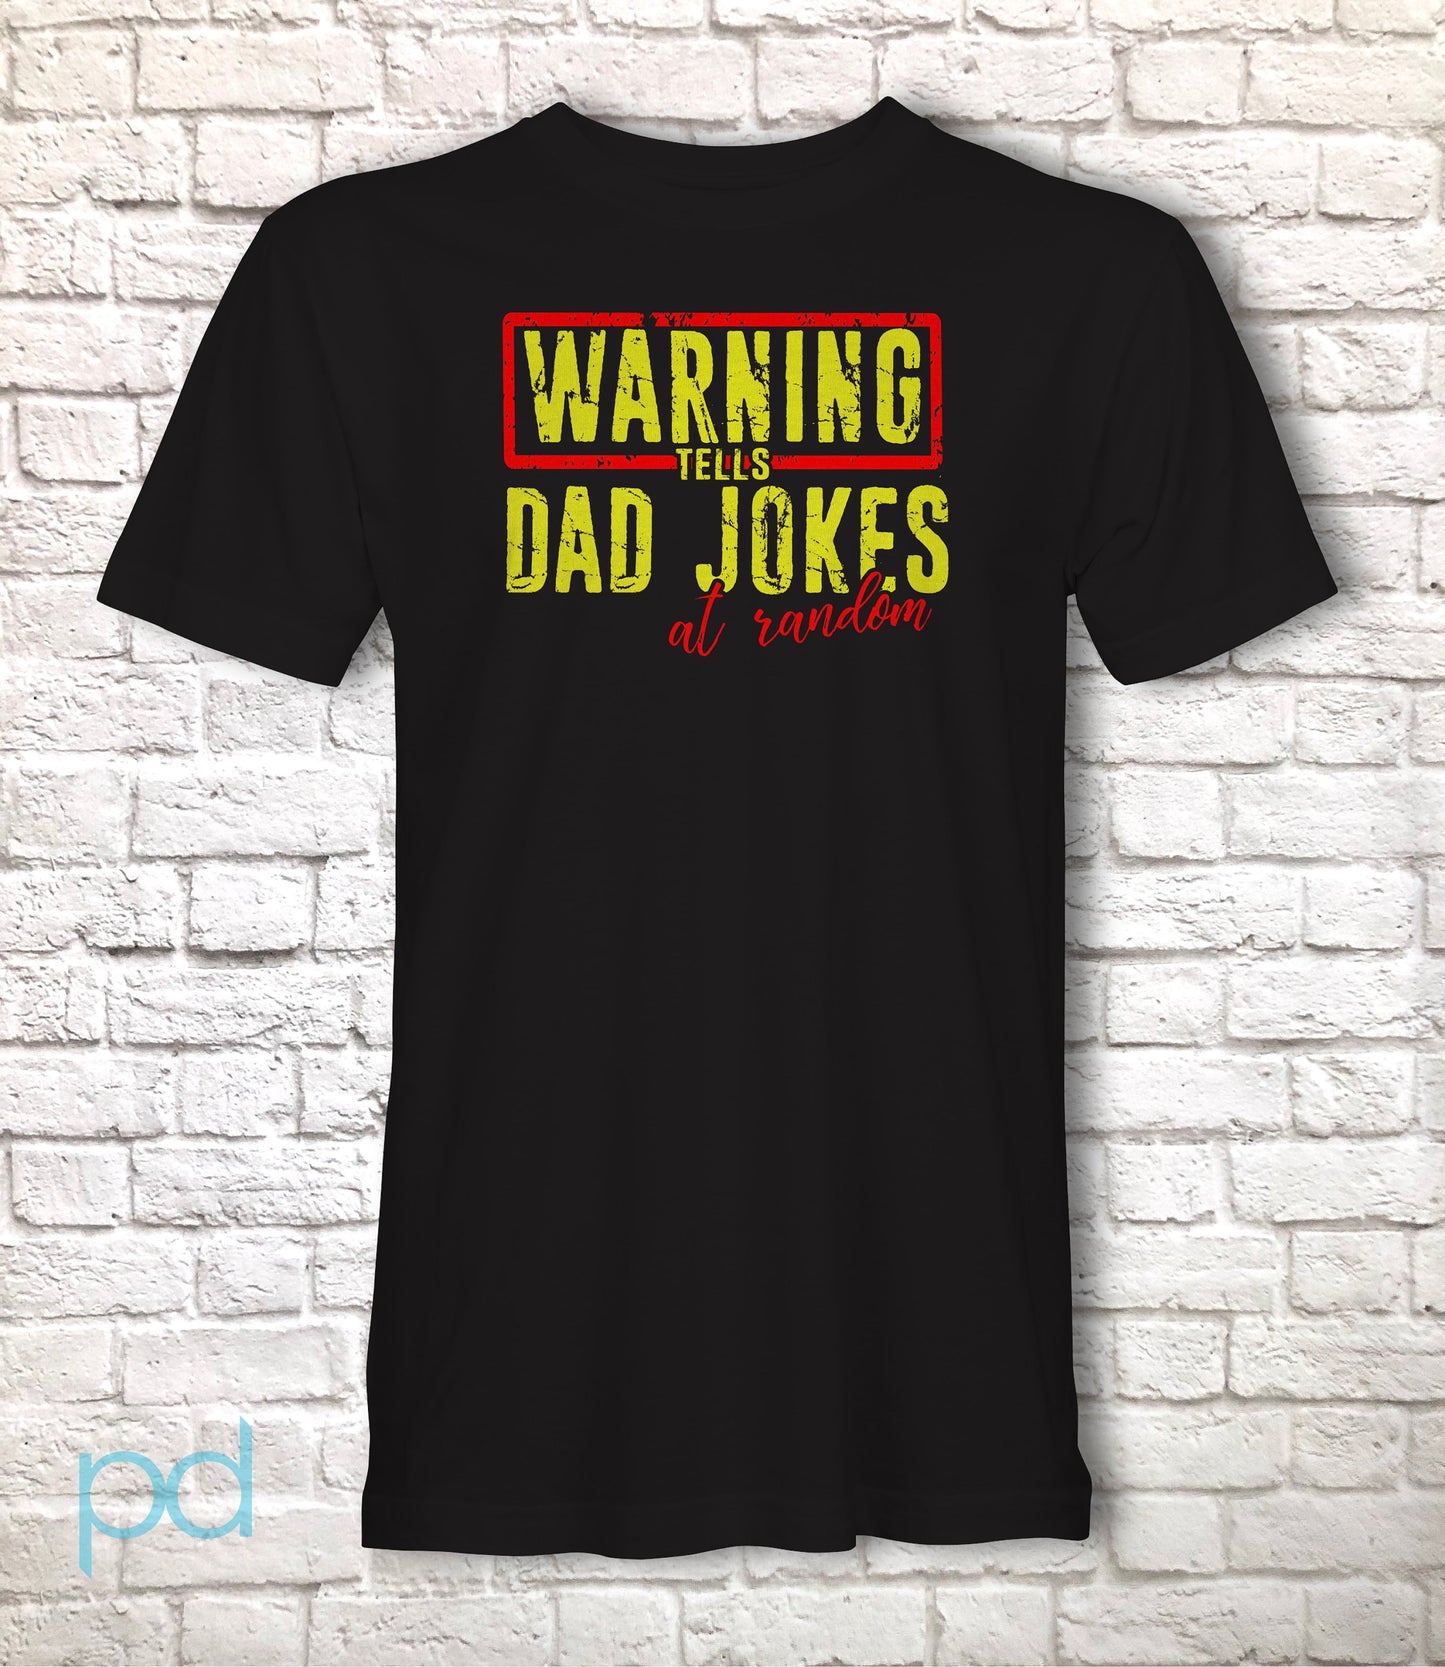 Dad Joke T-Shirt, Funny Warning Tells Random Dad Jokes Gift Idea, Humorous Father Graphic Print Design Printed on Tee Shirt Top